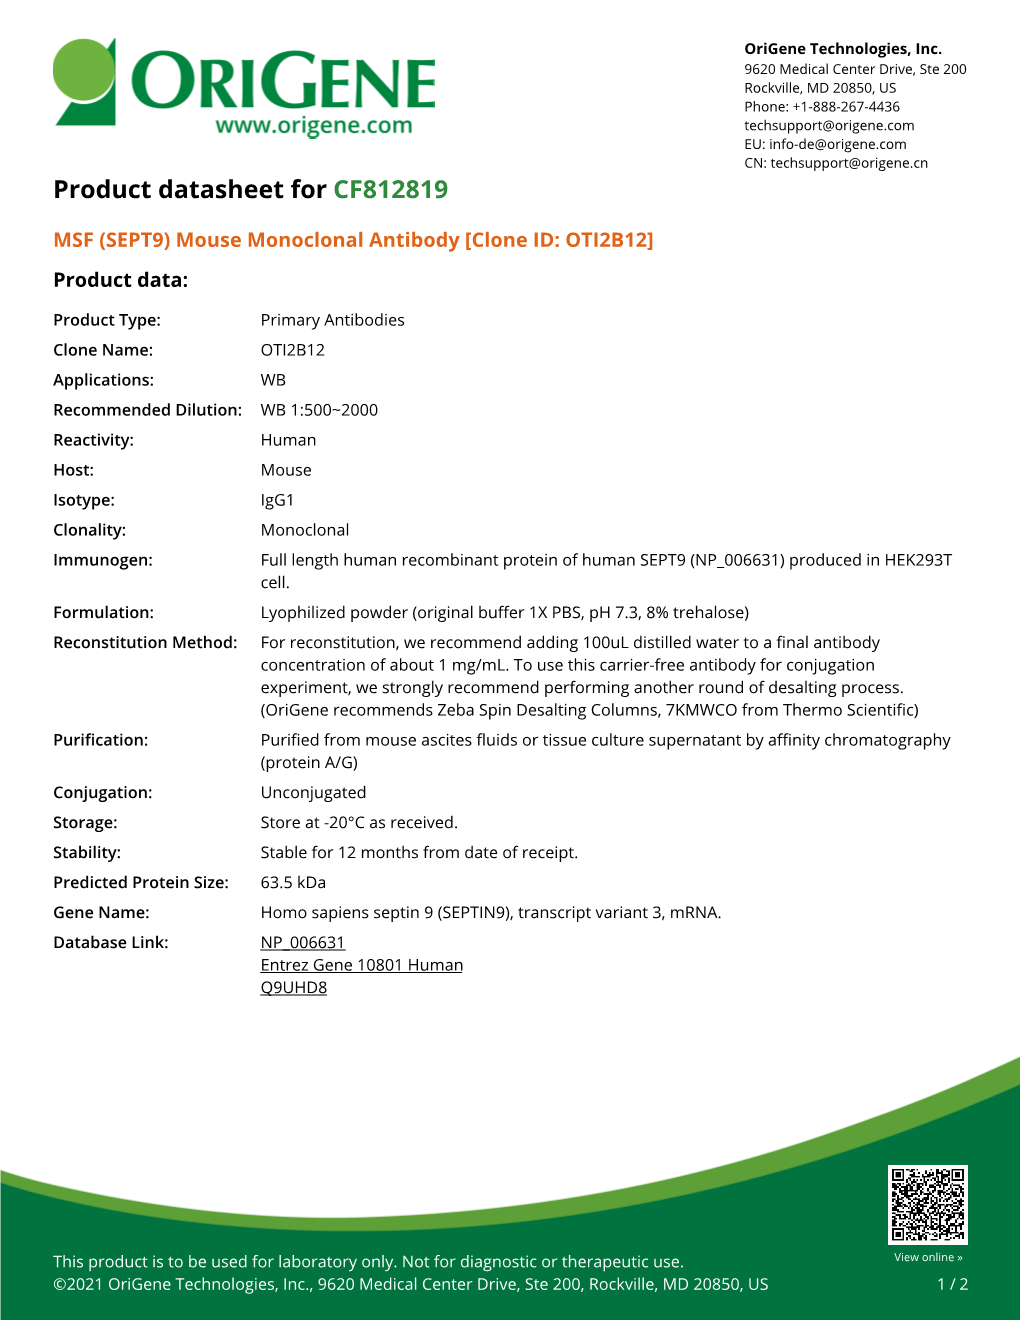 MSF (SEPT9) Mouse Monoclonal Antibody [Clone ID: OTI2B12] Product Data